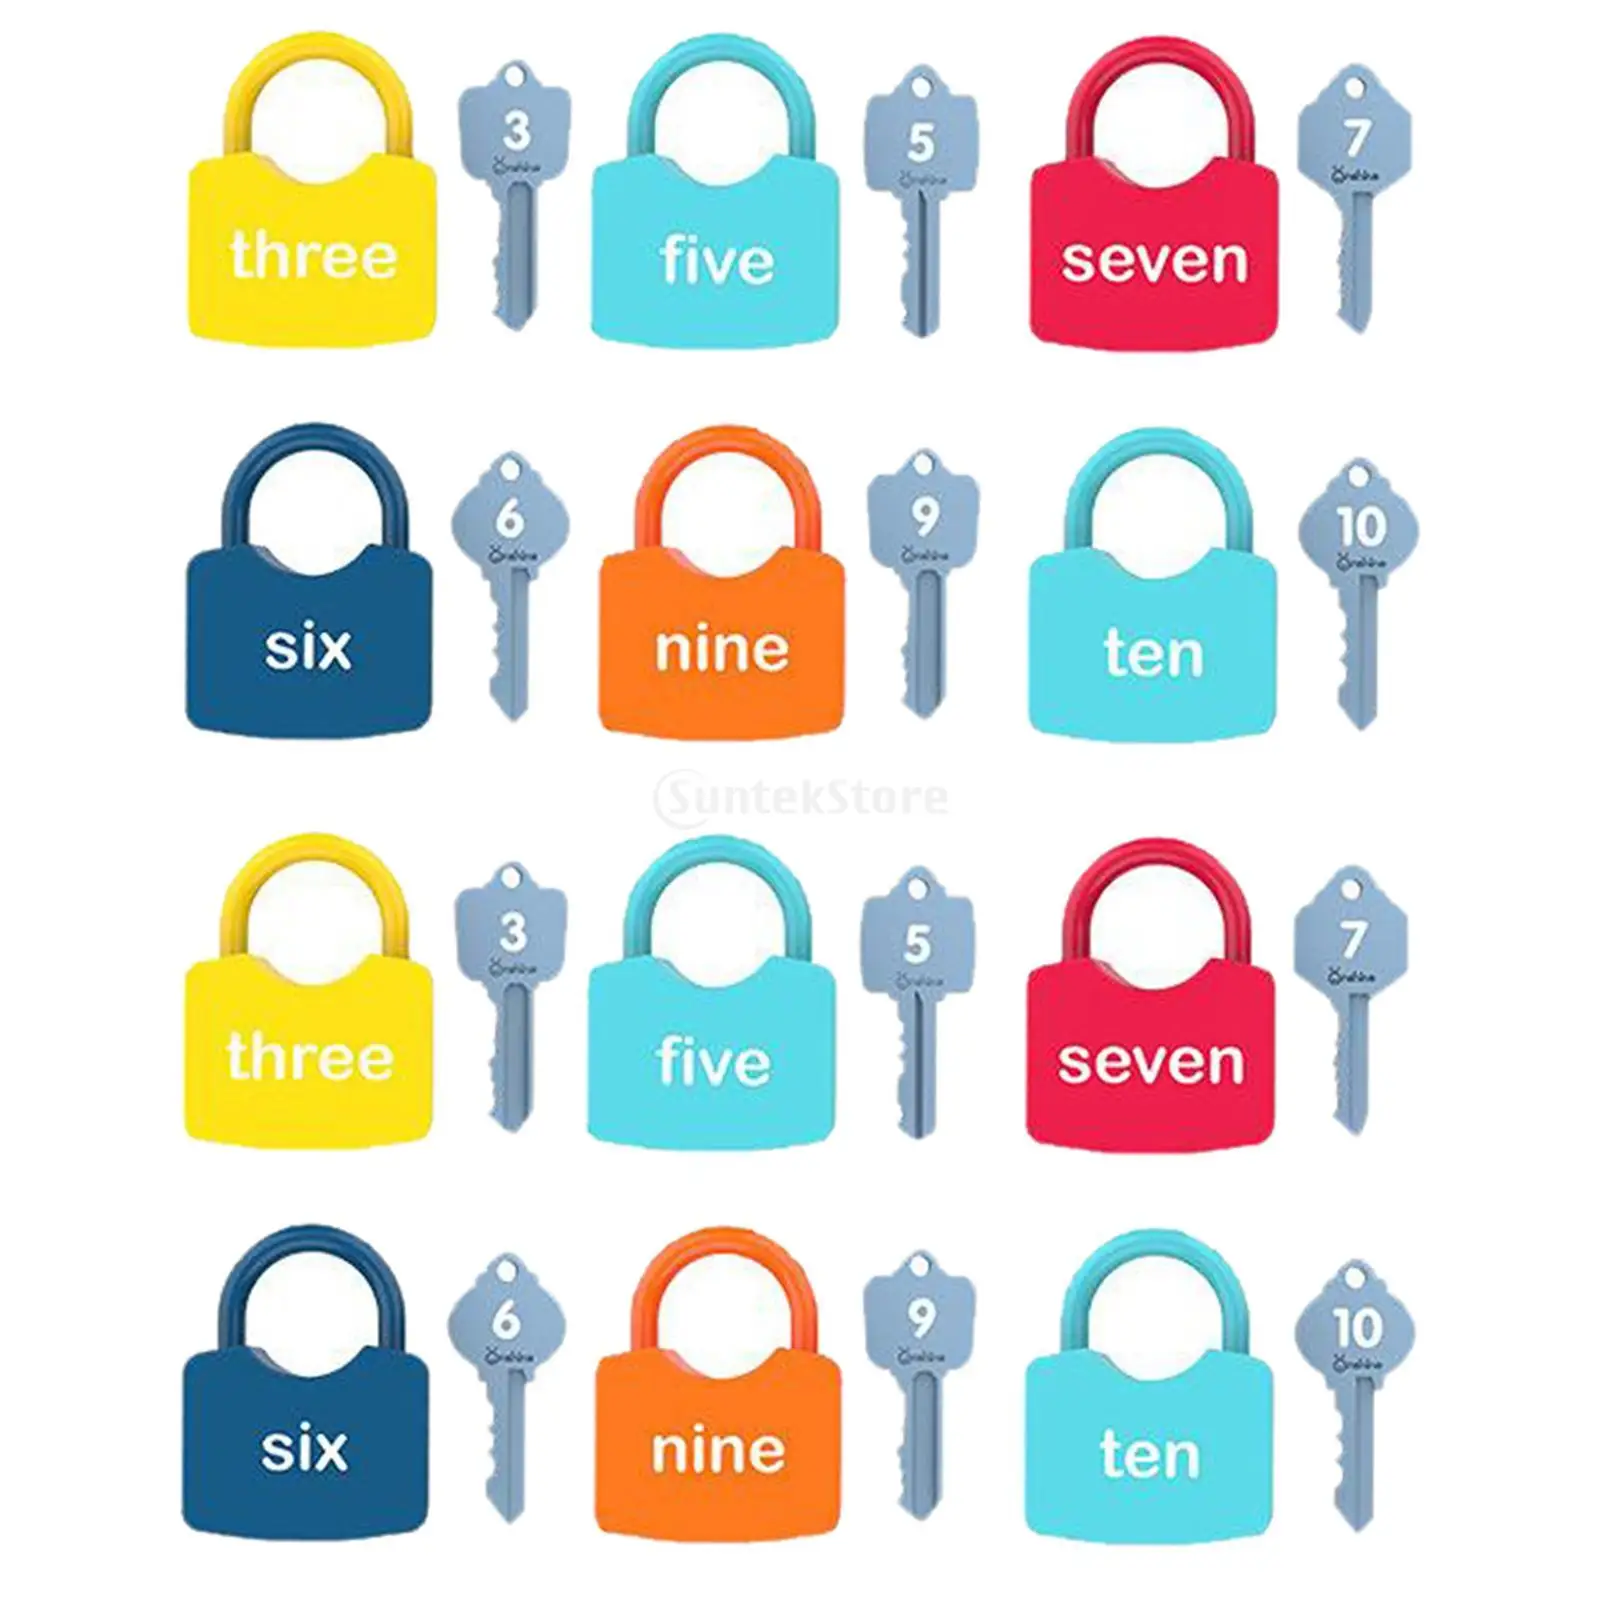 

Preschool Baby Toddlers Colorful Keys and Locks Set Padlock Keys children montessori Training Unlocking Toys